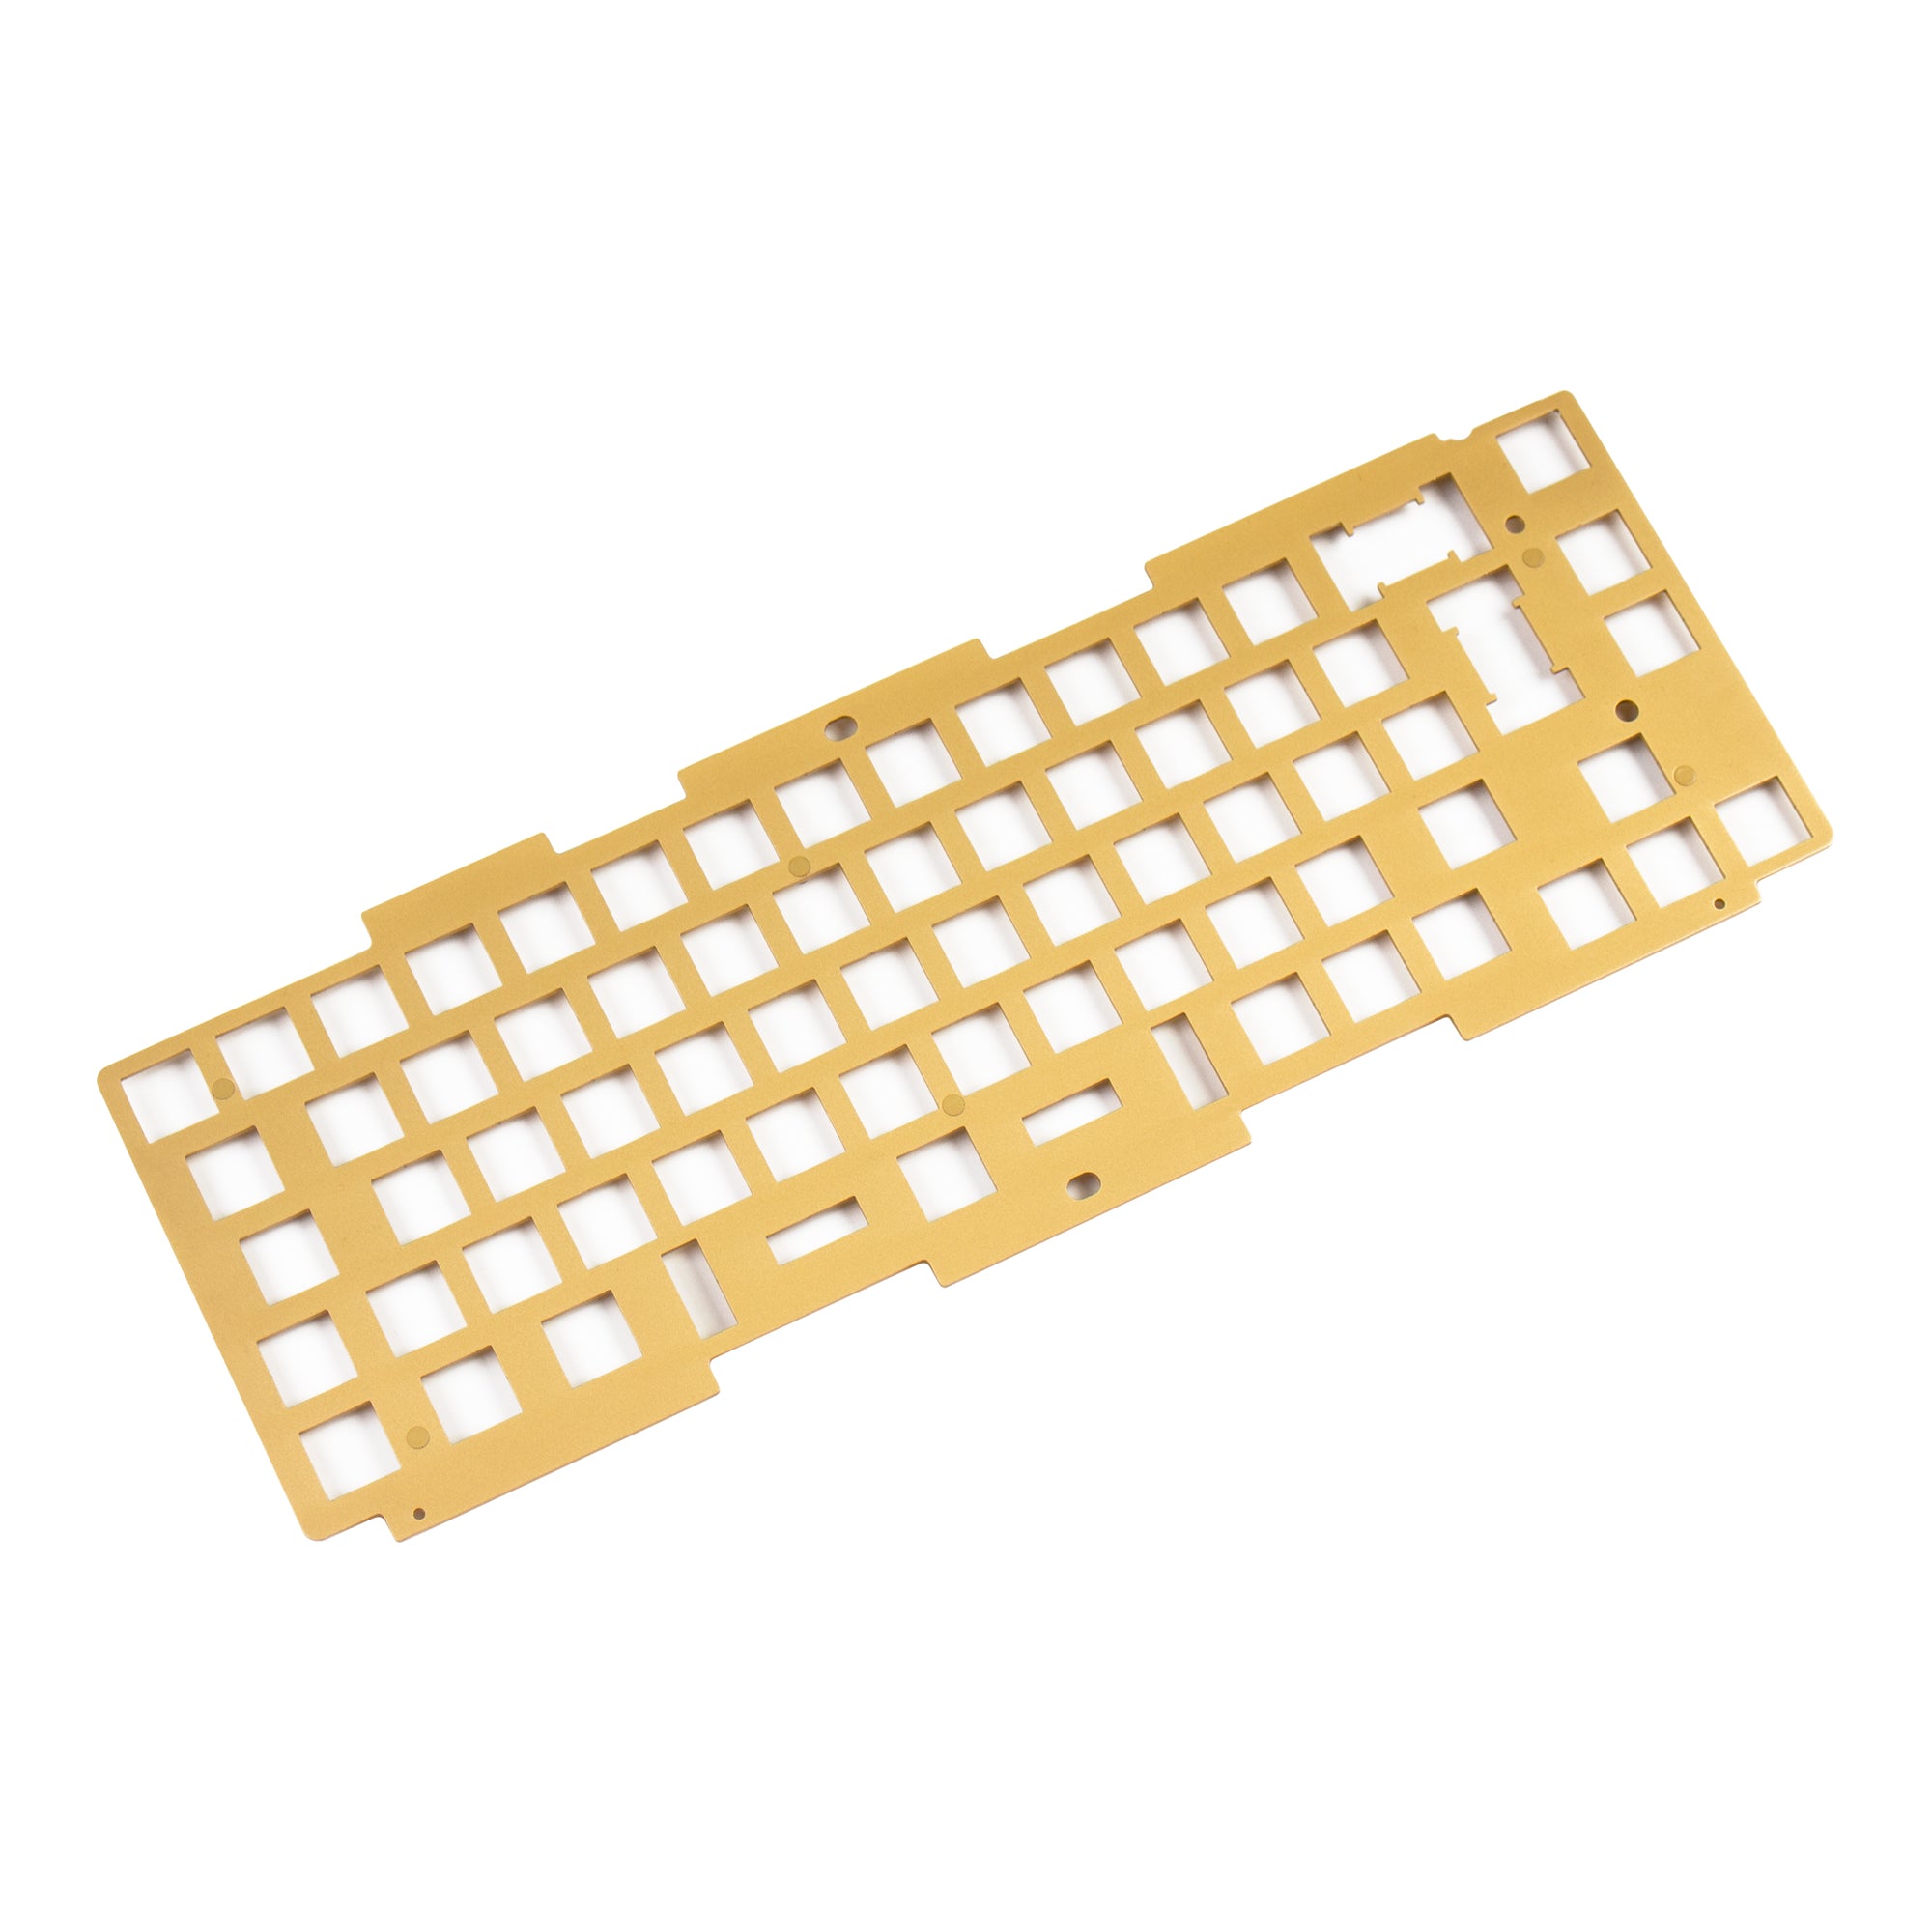 Keychron q2 custom mechanical keyboard brass plate for iso layout